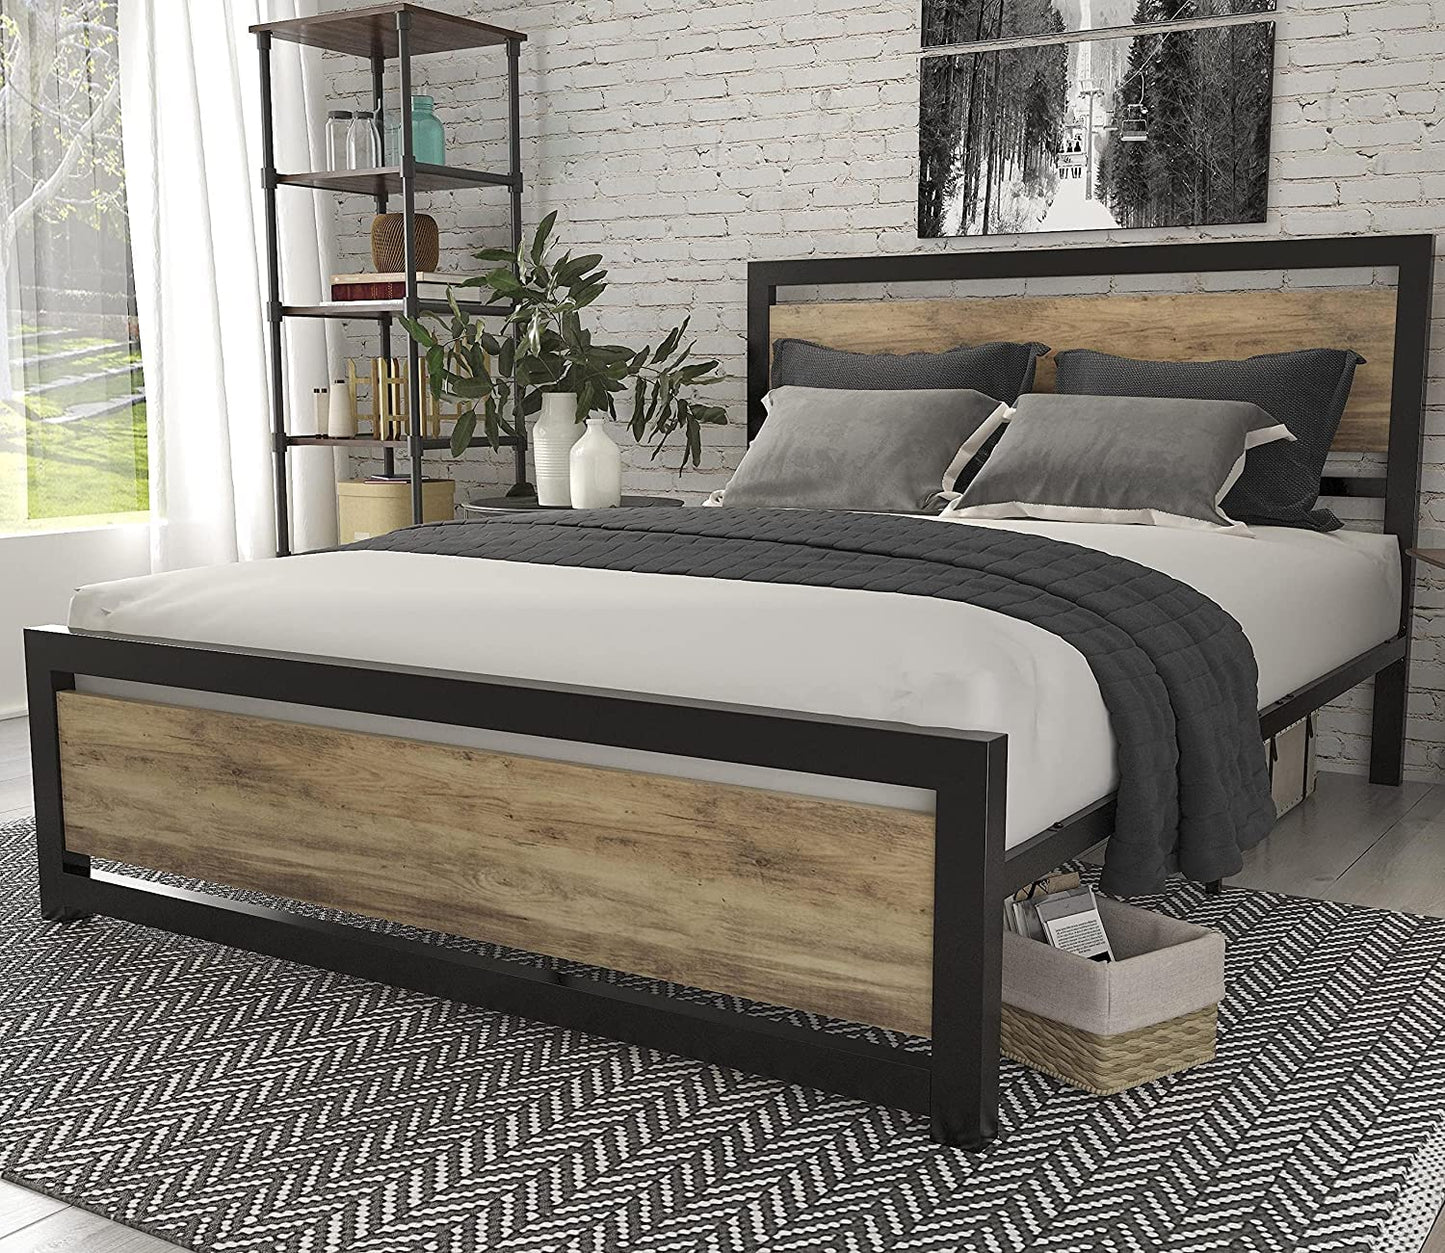 Bowzar Queen Size 5X6.5 Feet Bed Frame with Modern Wooden Headboard Heavy Duty Platform Metal Bed